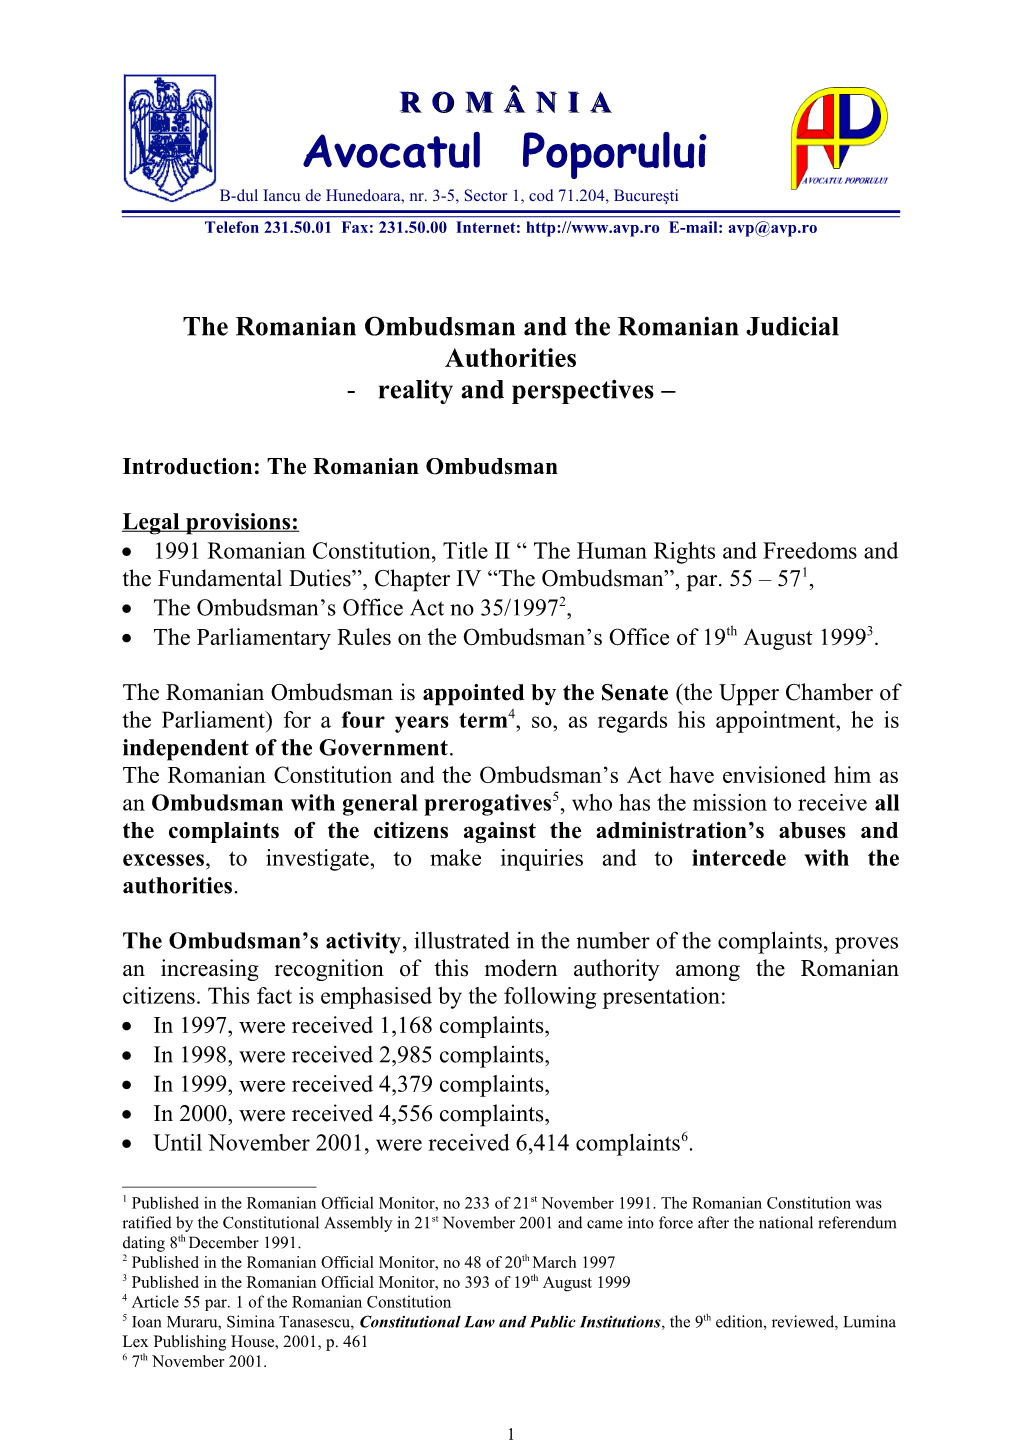 the Romanian Ombudsman and the Romanian Judicial Authorities